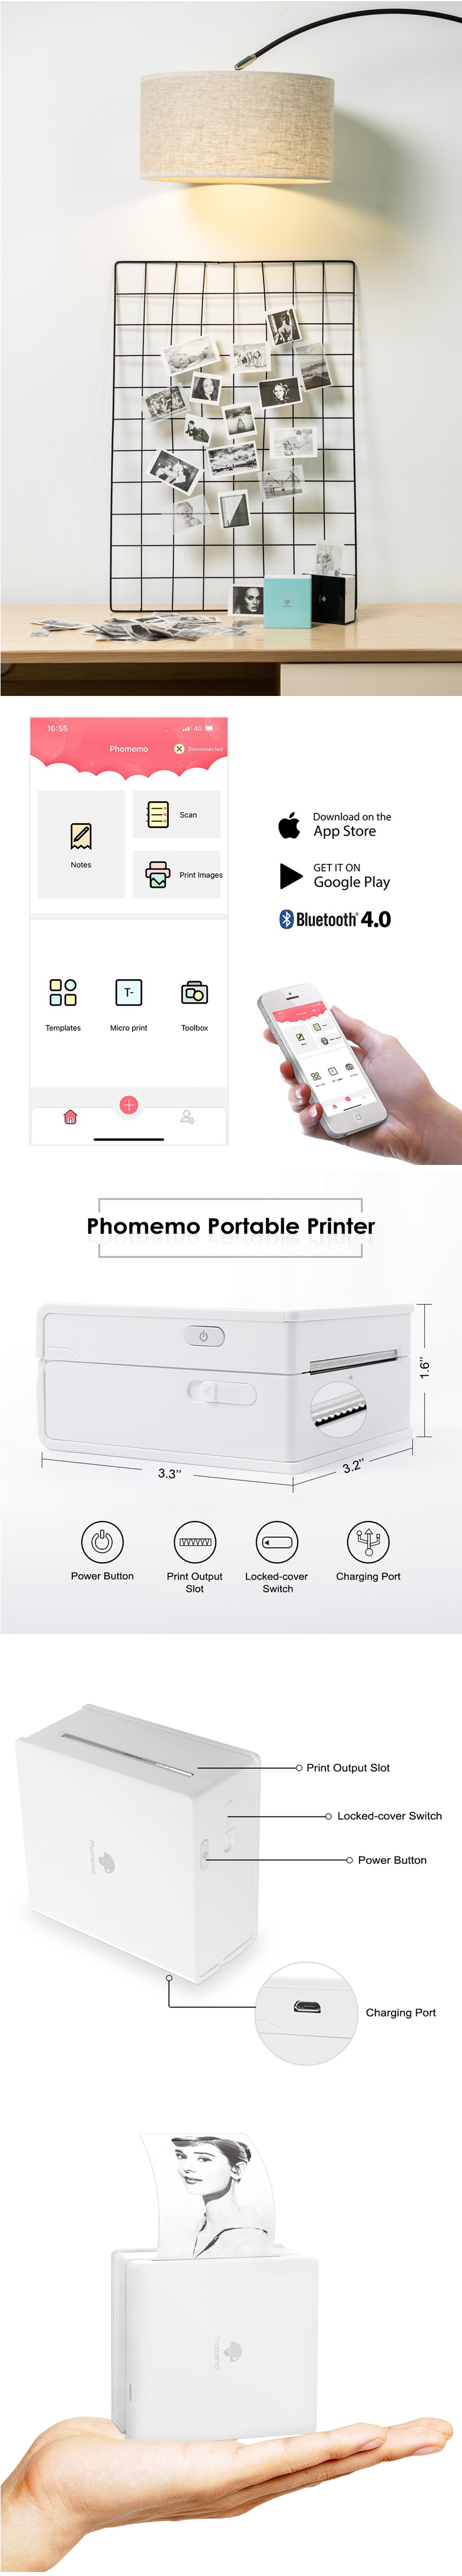 MRIN-M02-Thermal-bluetooth-Printer-Mini-Wireless-Paper-Pocket-Printer-Portable-Instant-Mobile-Printe-1425420-2